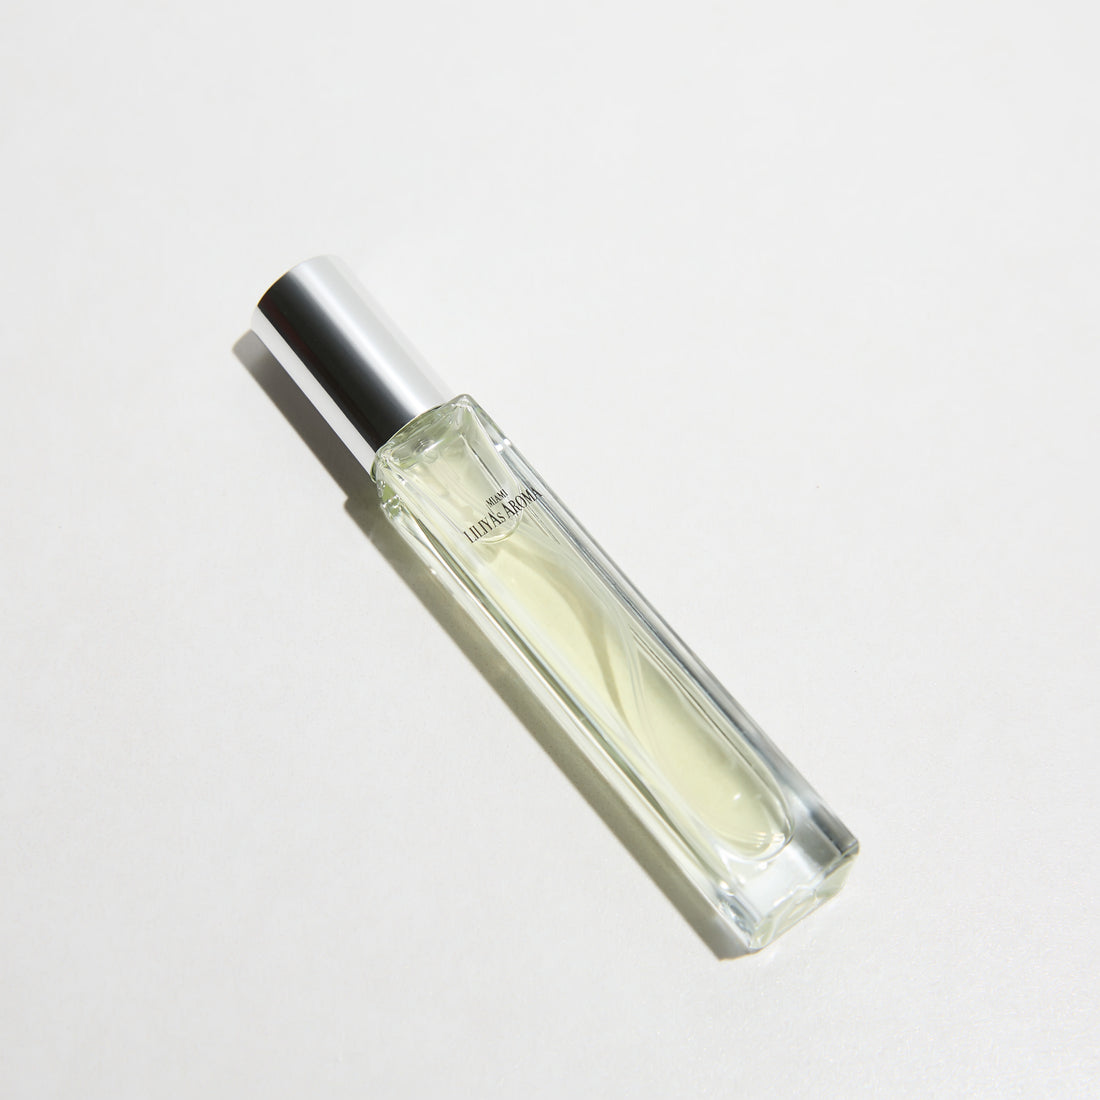 Blackberry - Vanilla - Voyage Vibes - Travel Perfume for Men and Women - Amber Fragrance 0.34 Fl Oz